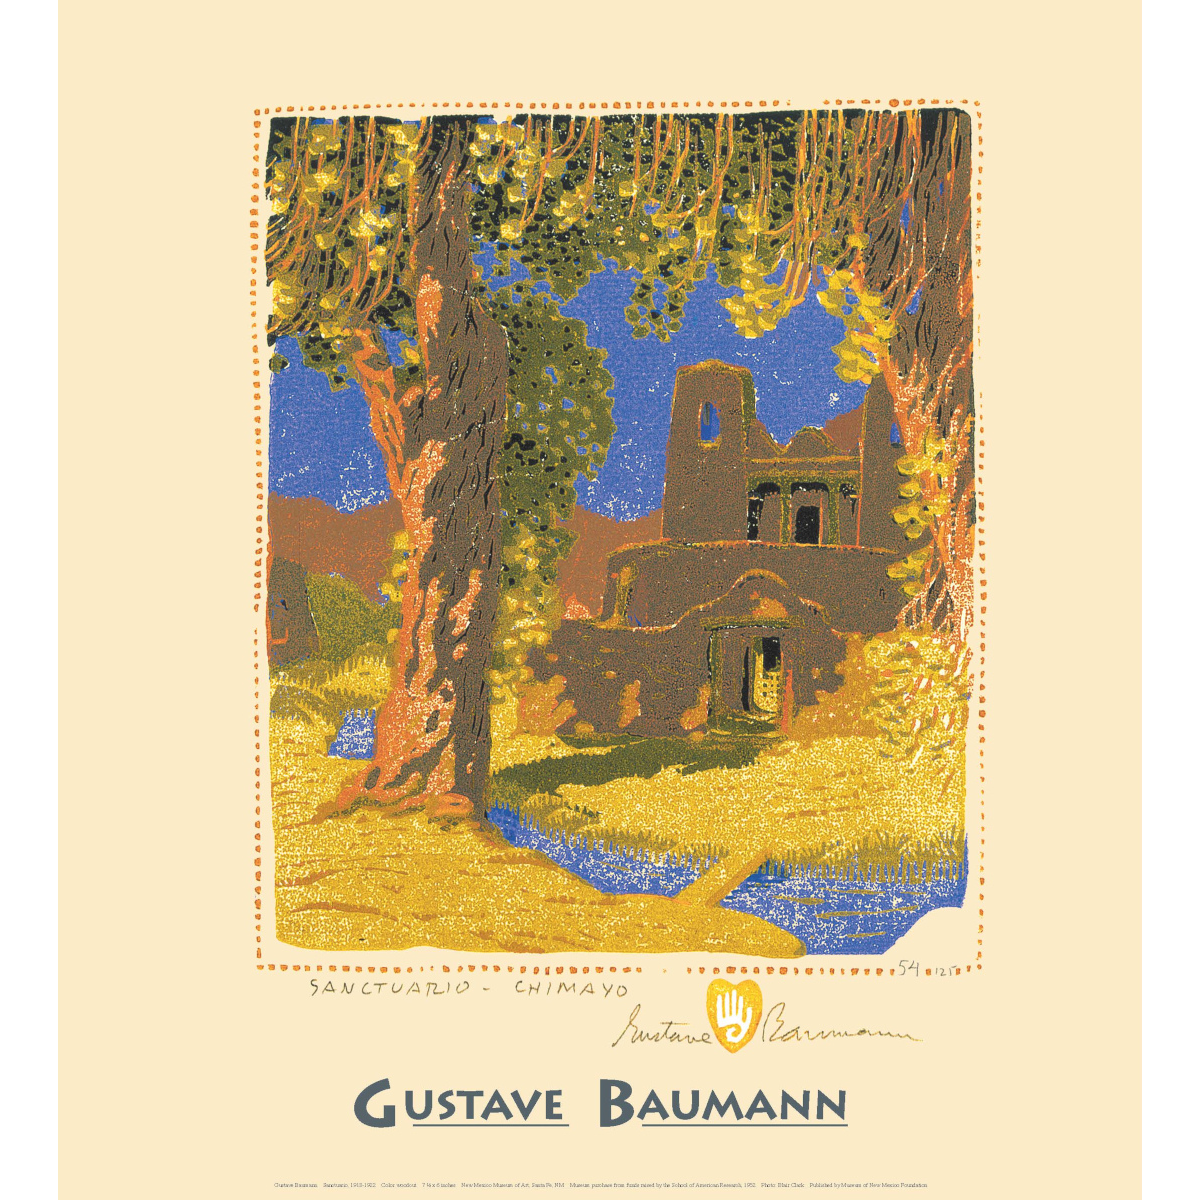 Gustave Baumann Sanctuario Chimayo Poster